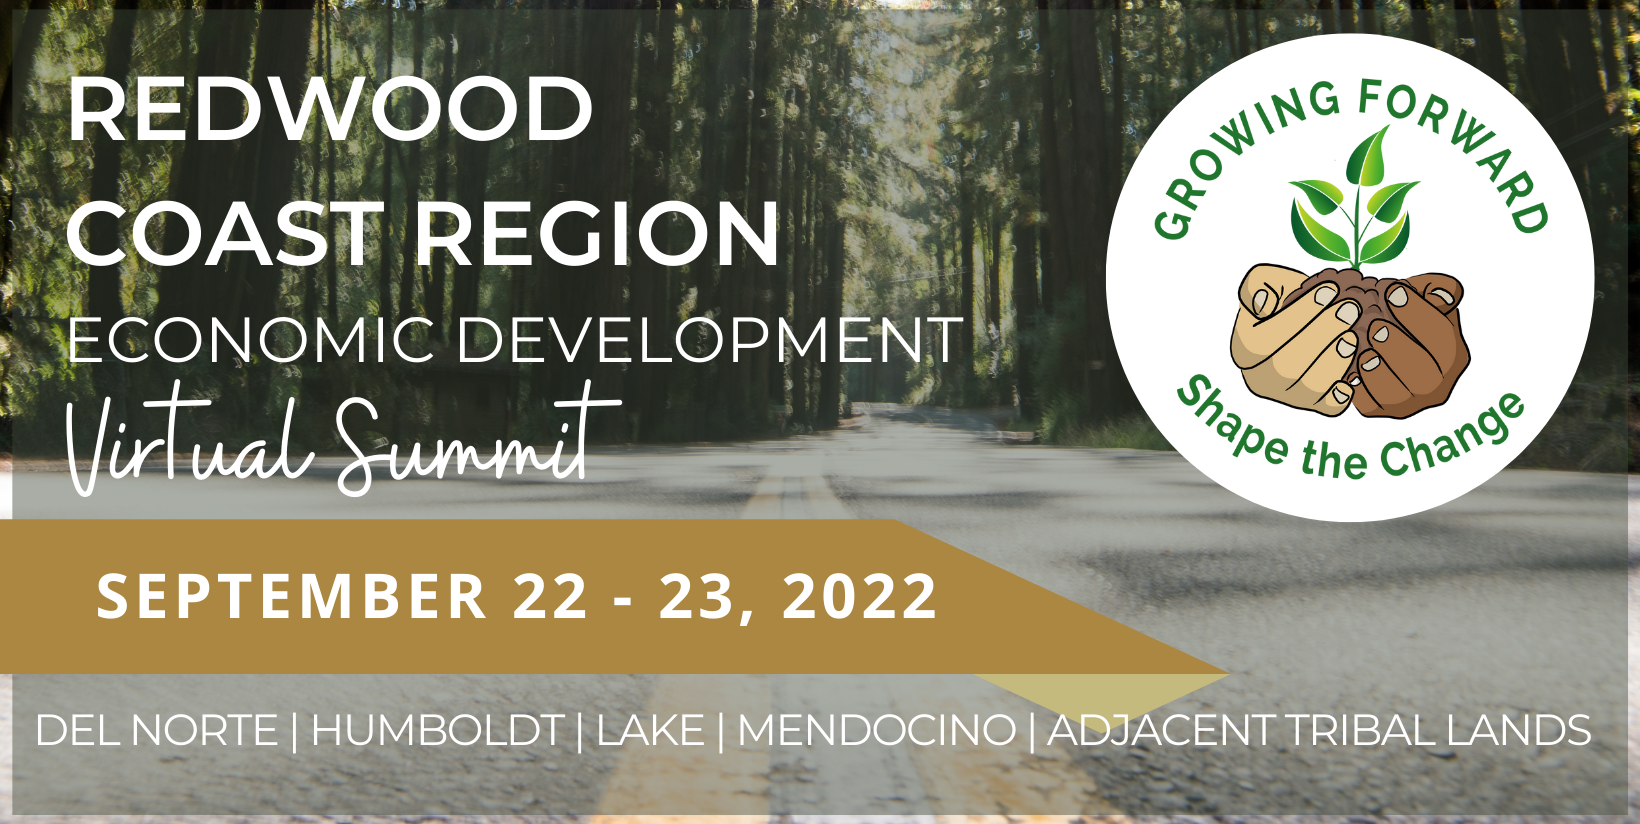 Redwood Coast Region Economic Development Summit September 22-23, 2022 Del Norte, Humboldt, Lake, Mendociono, Adjacent Tribal Lands